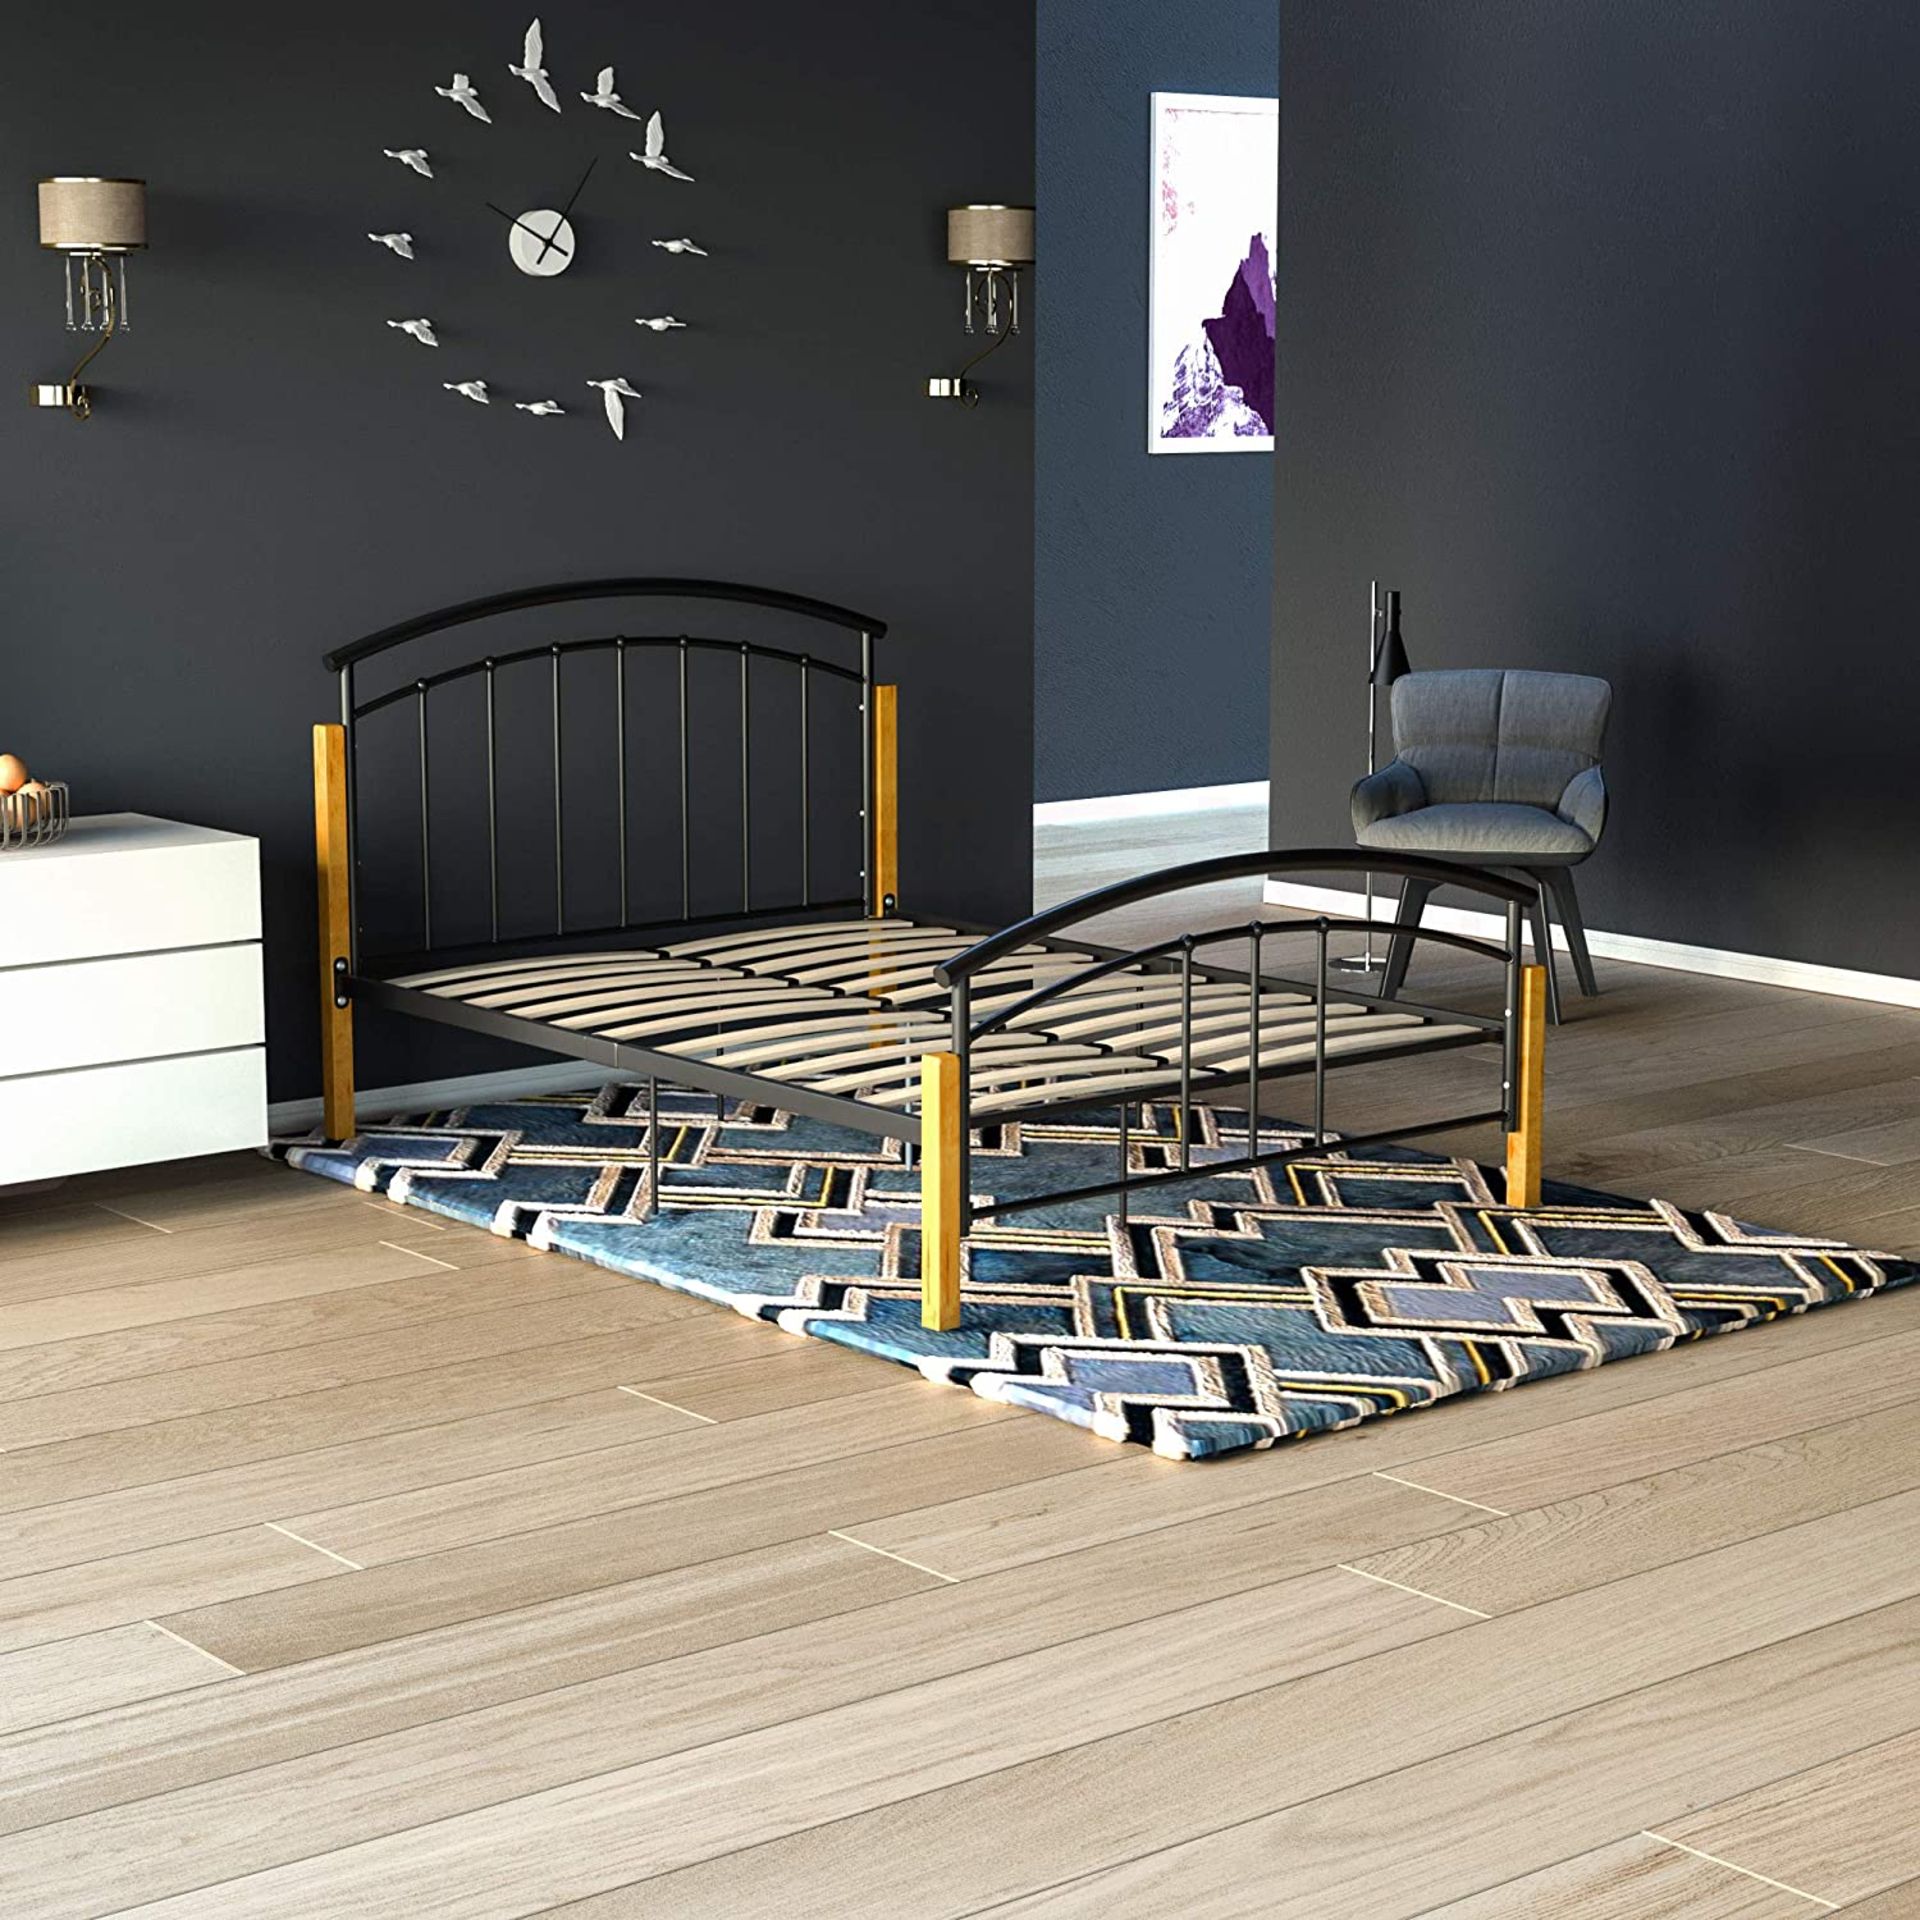 Vida Designs Venice Double Bed, Frame Metal & Wood Solid Headboard Low Foot End, Black - Image 2 of 5